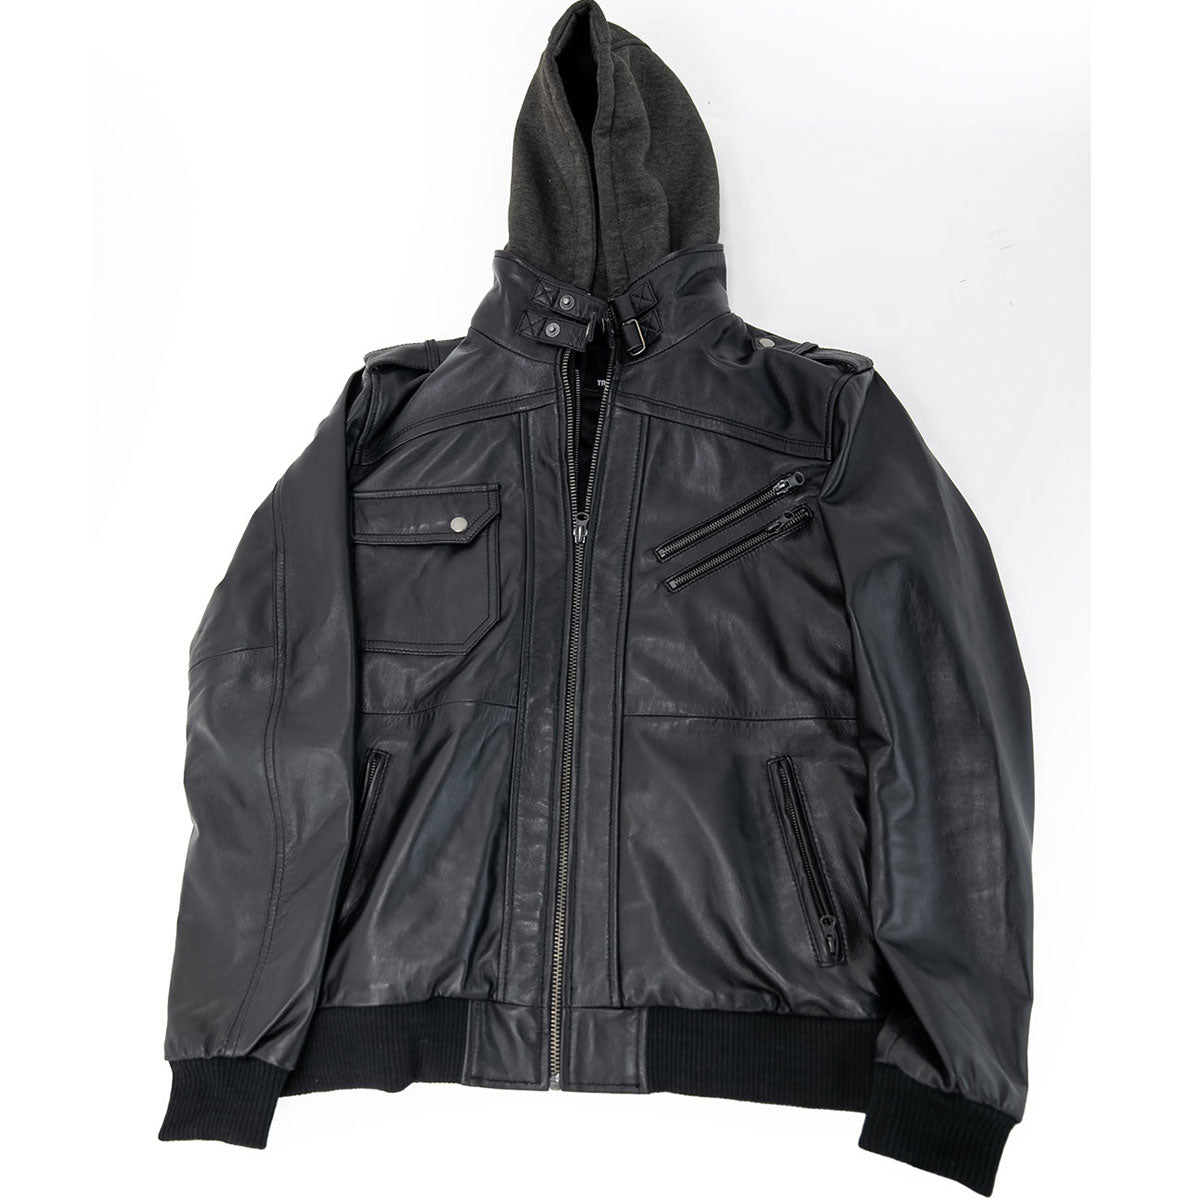  Bigardini Reversible Black Leather Jacket Men – Real Leather  Motorcycle Bomber Jacket with Hood (S) : Clothing, Shoes & Jewelry